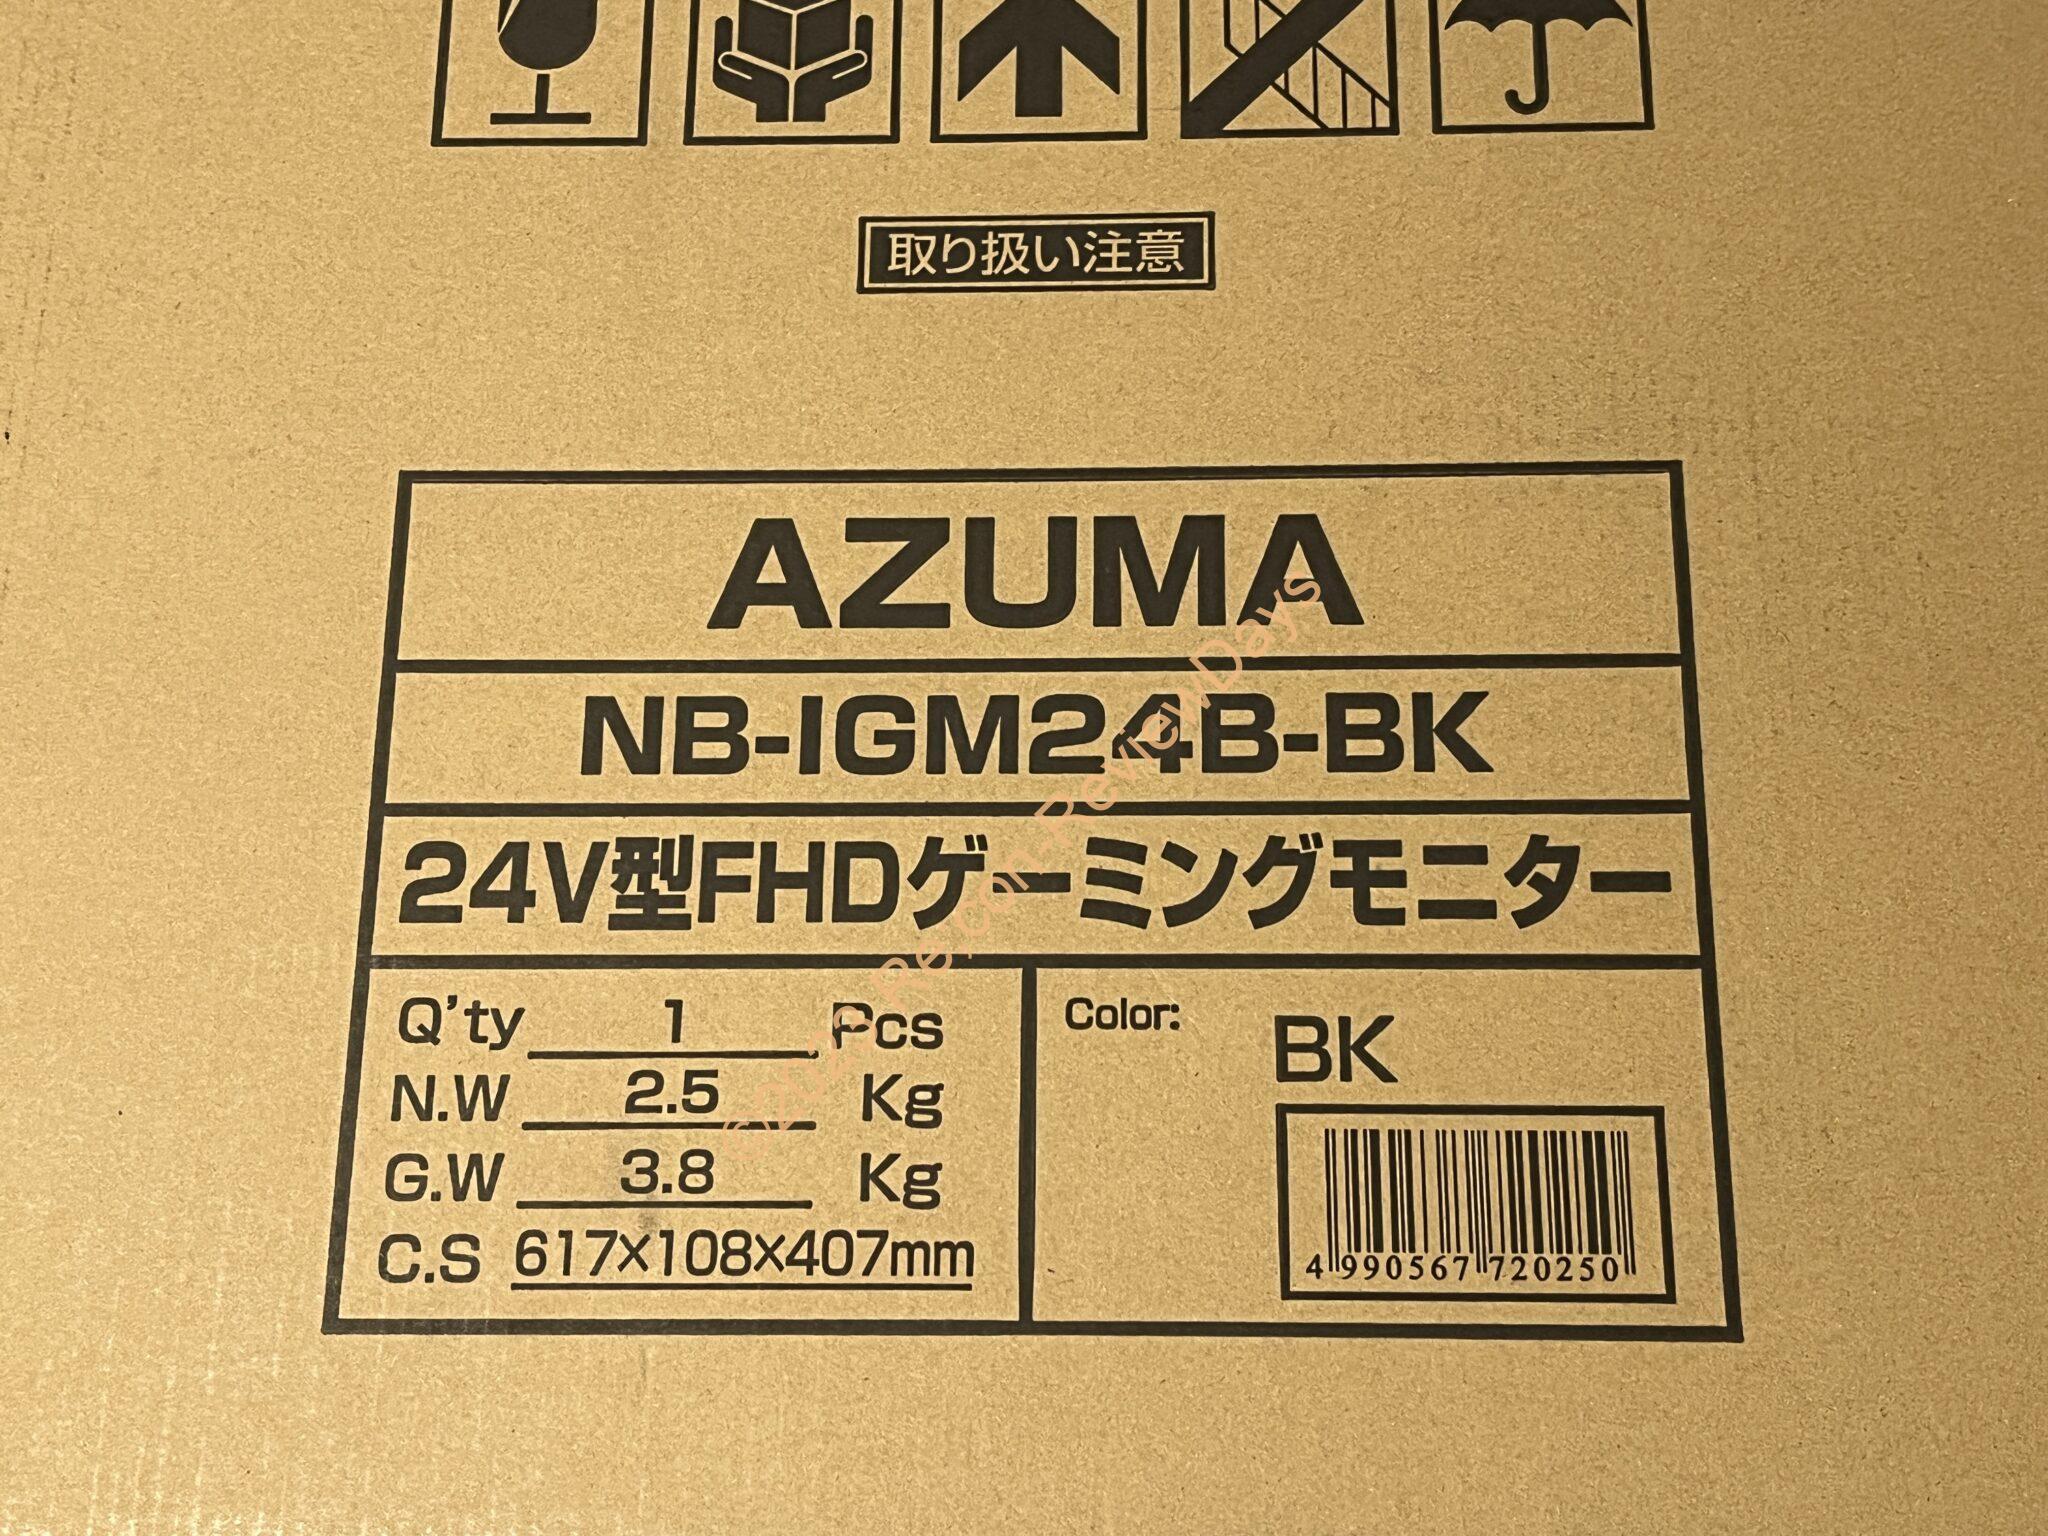 AZUMA 24v型FHDゲーミングモニター NB-IGM24B-BK - ディスプレイ